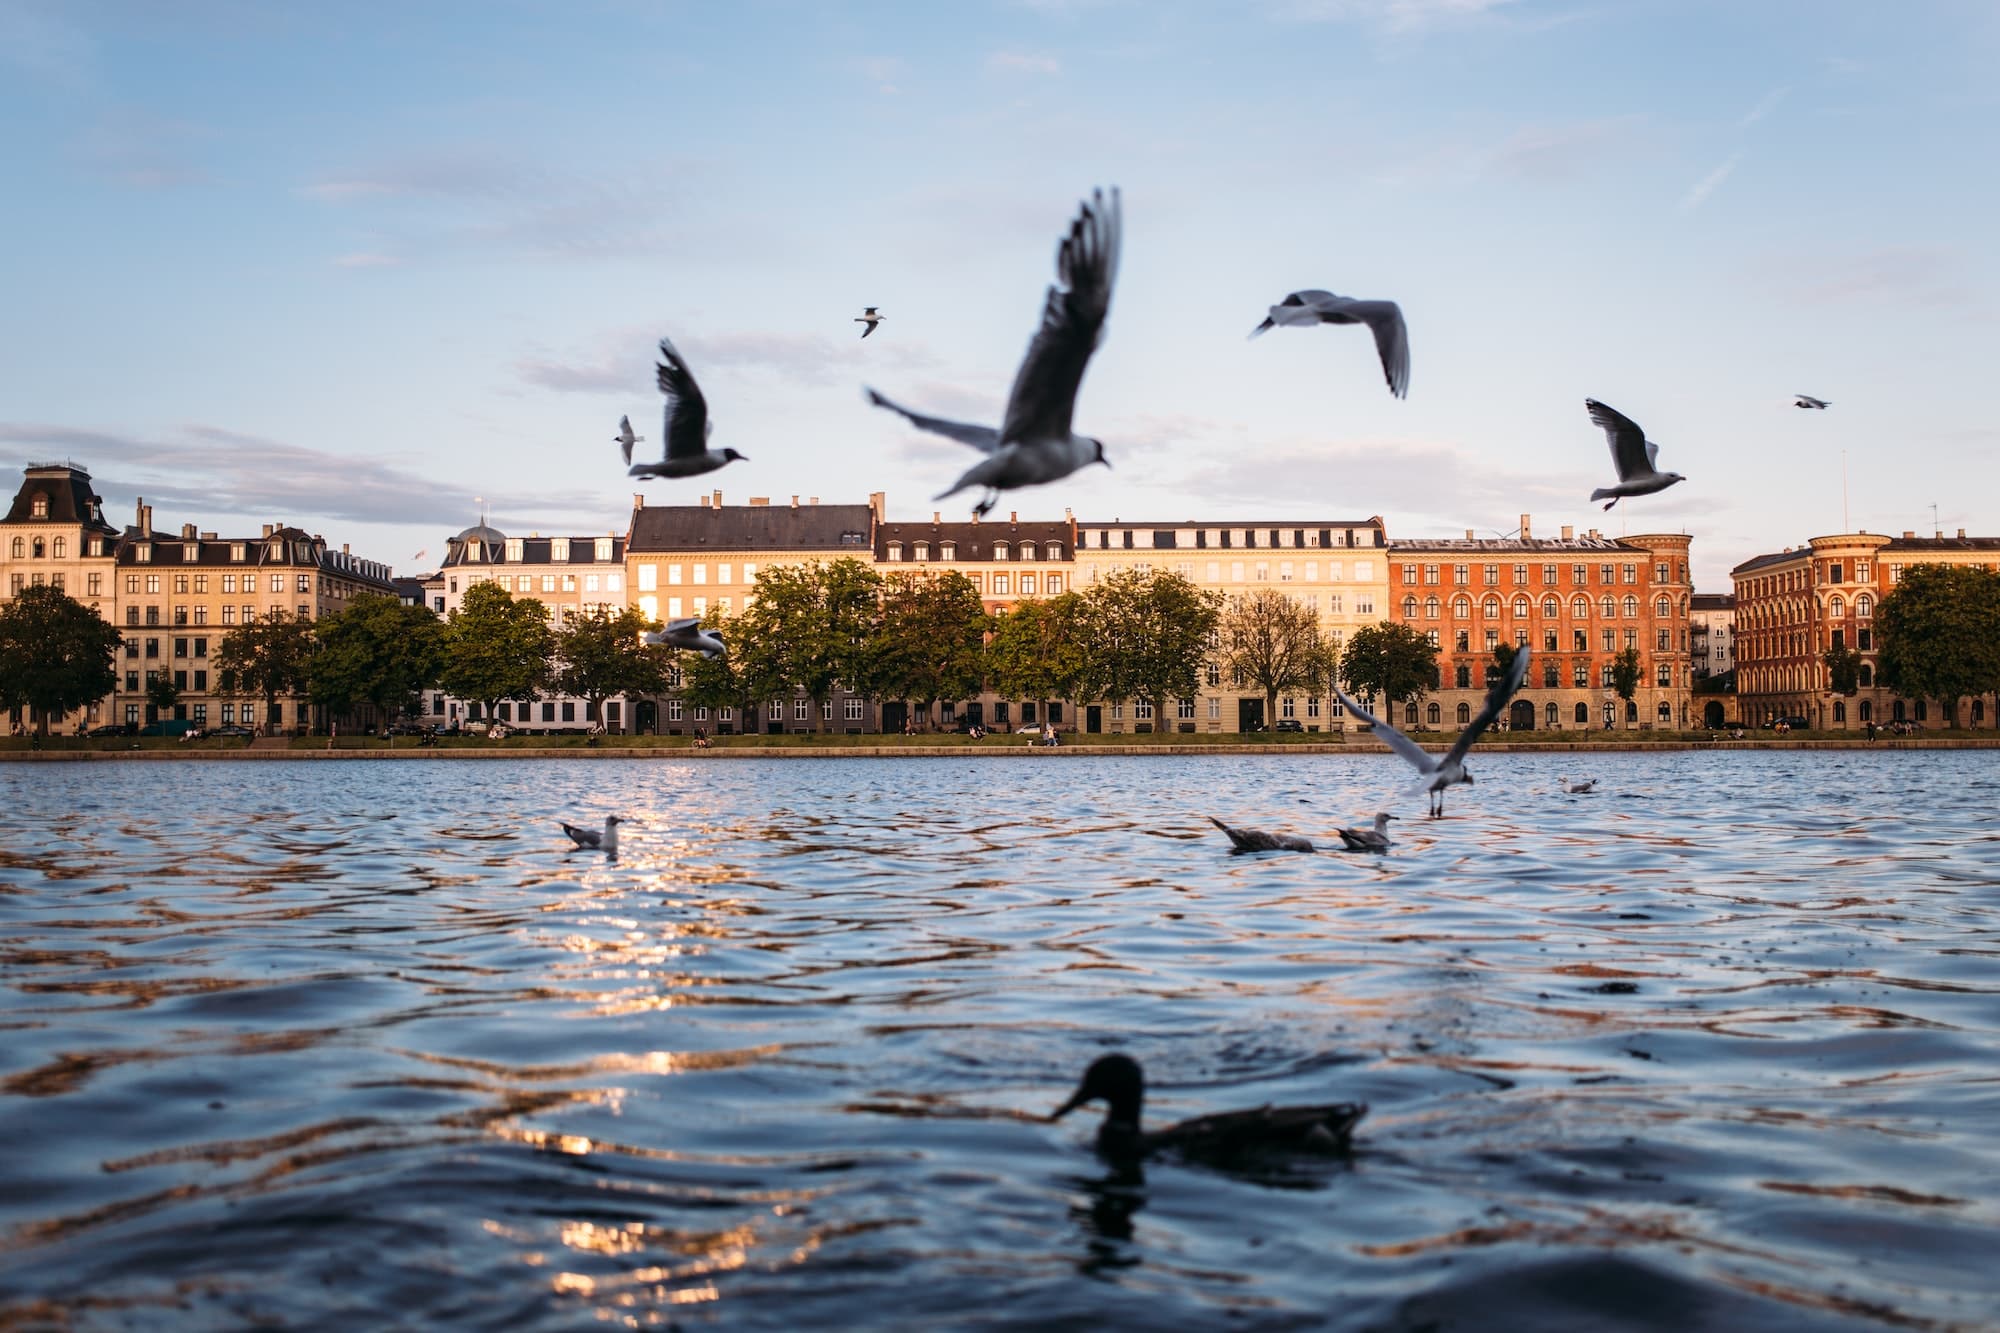 Copenhagen Birds on the Canal